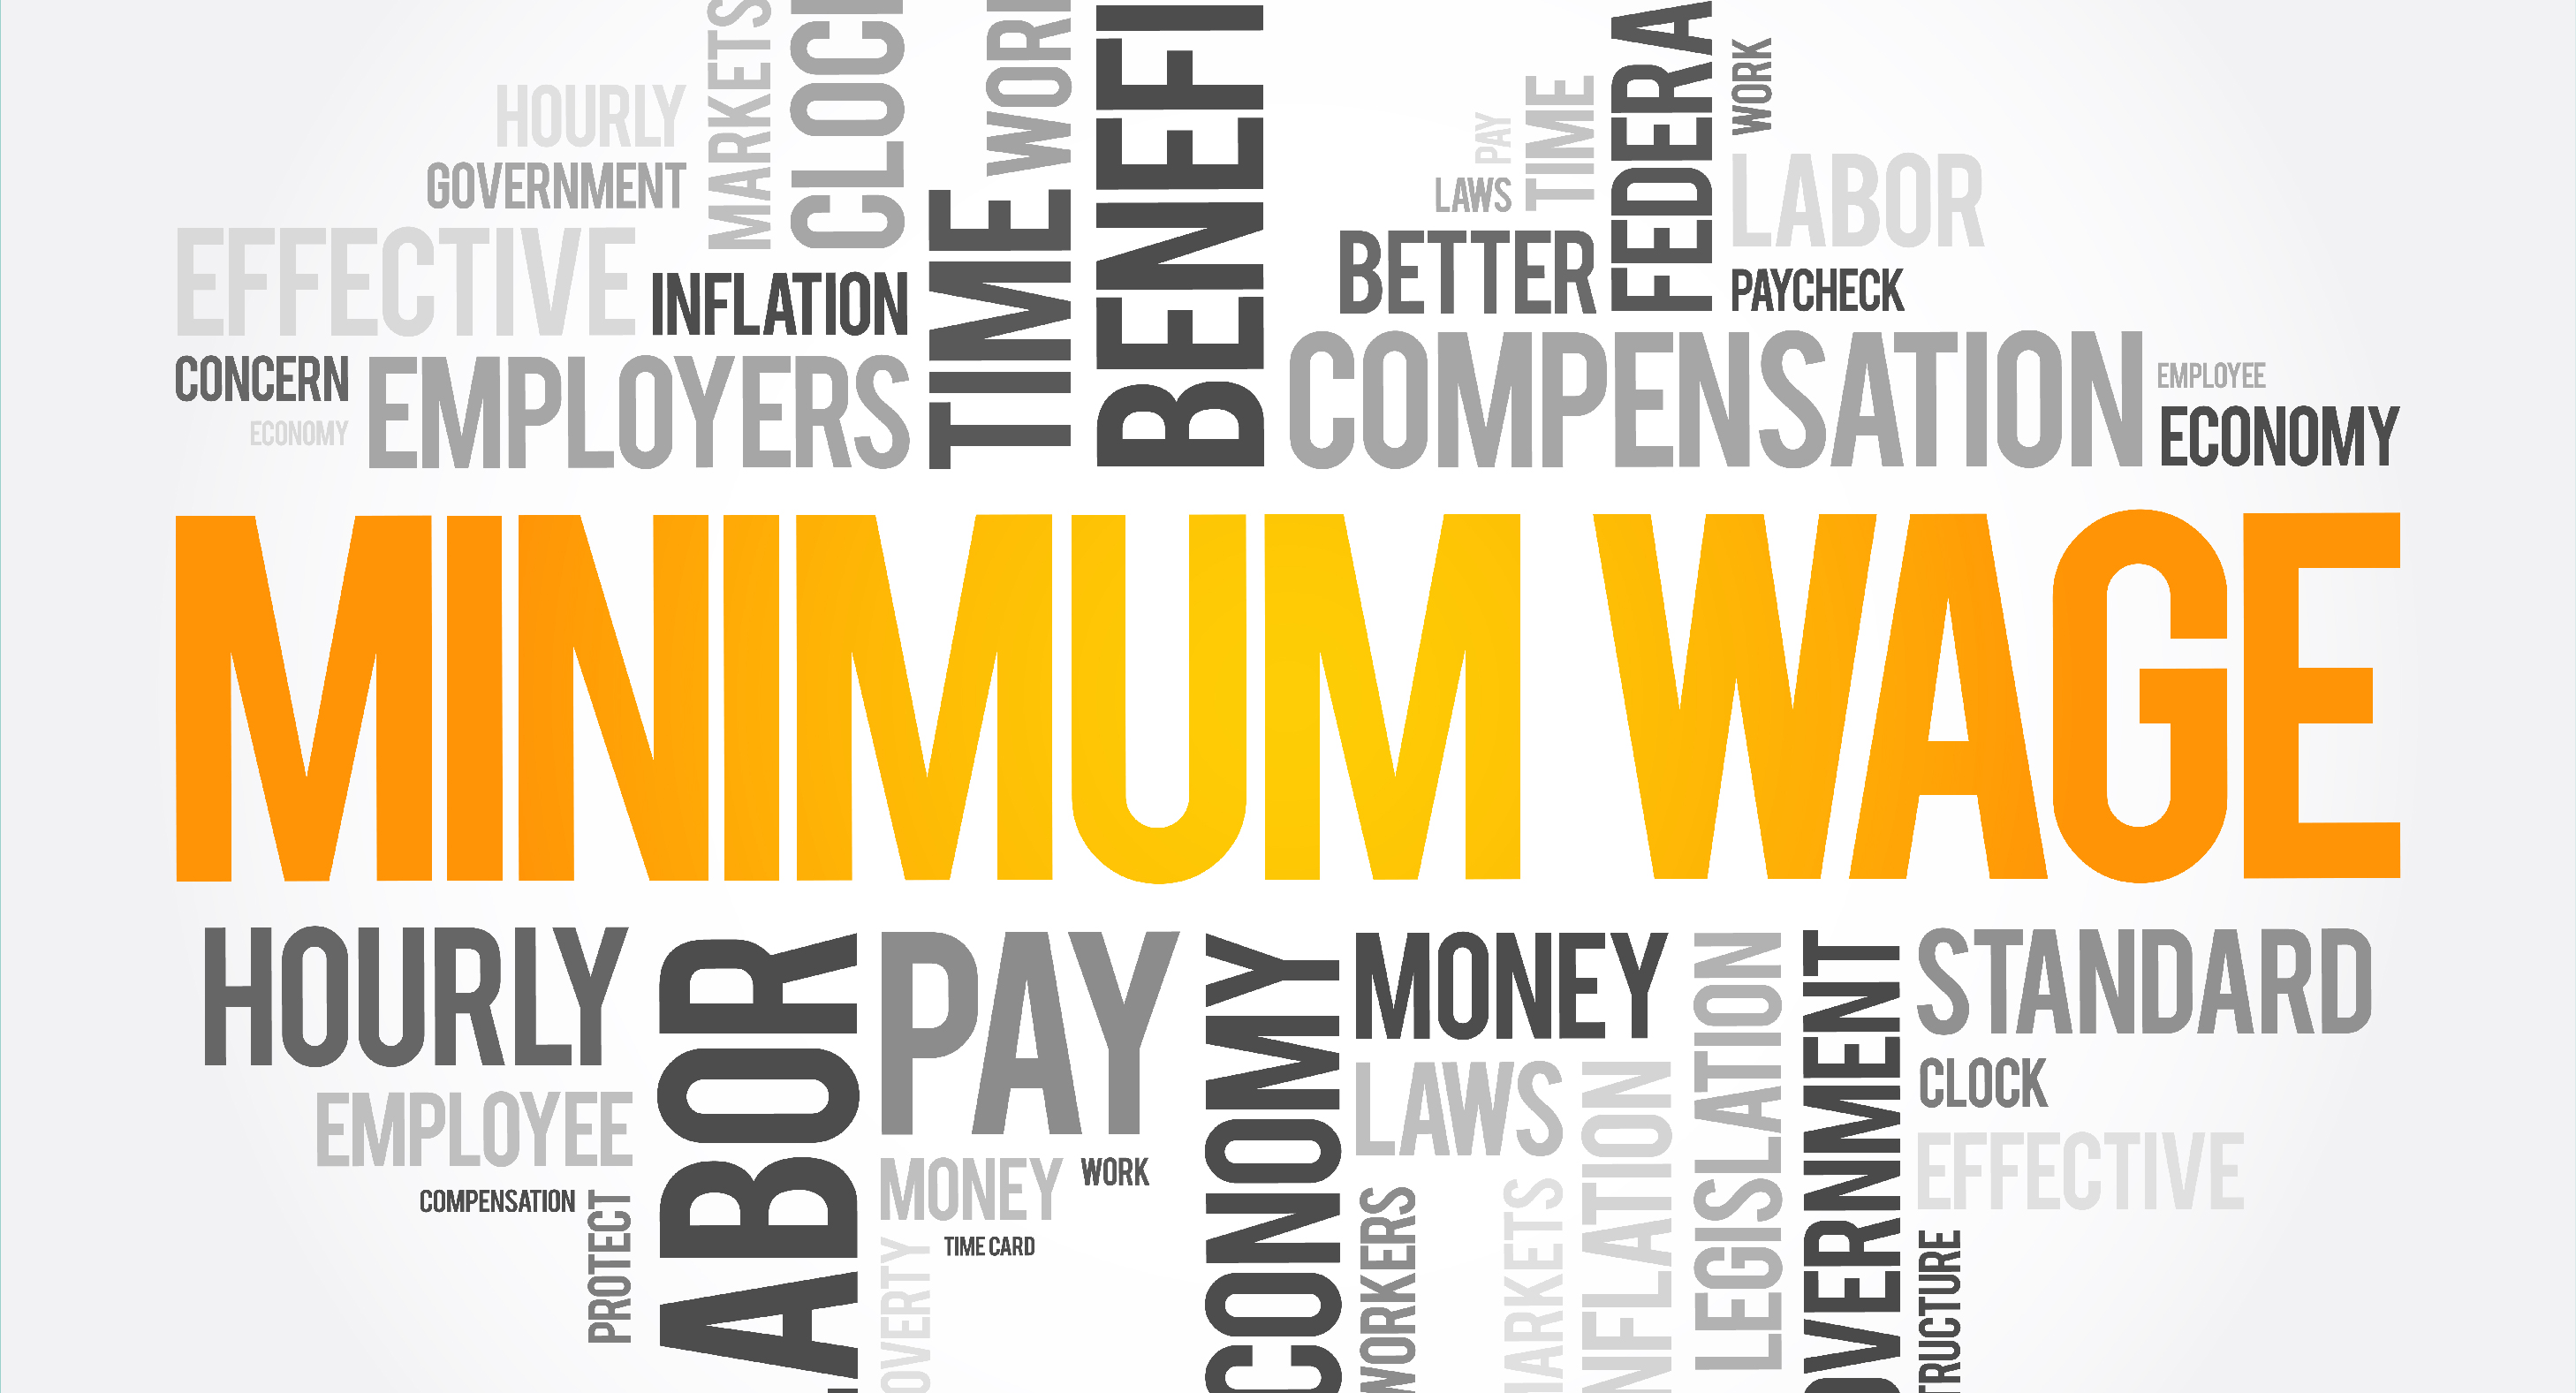 How To Retain Minimum Wage Employees